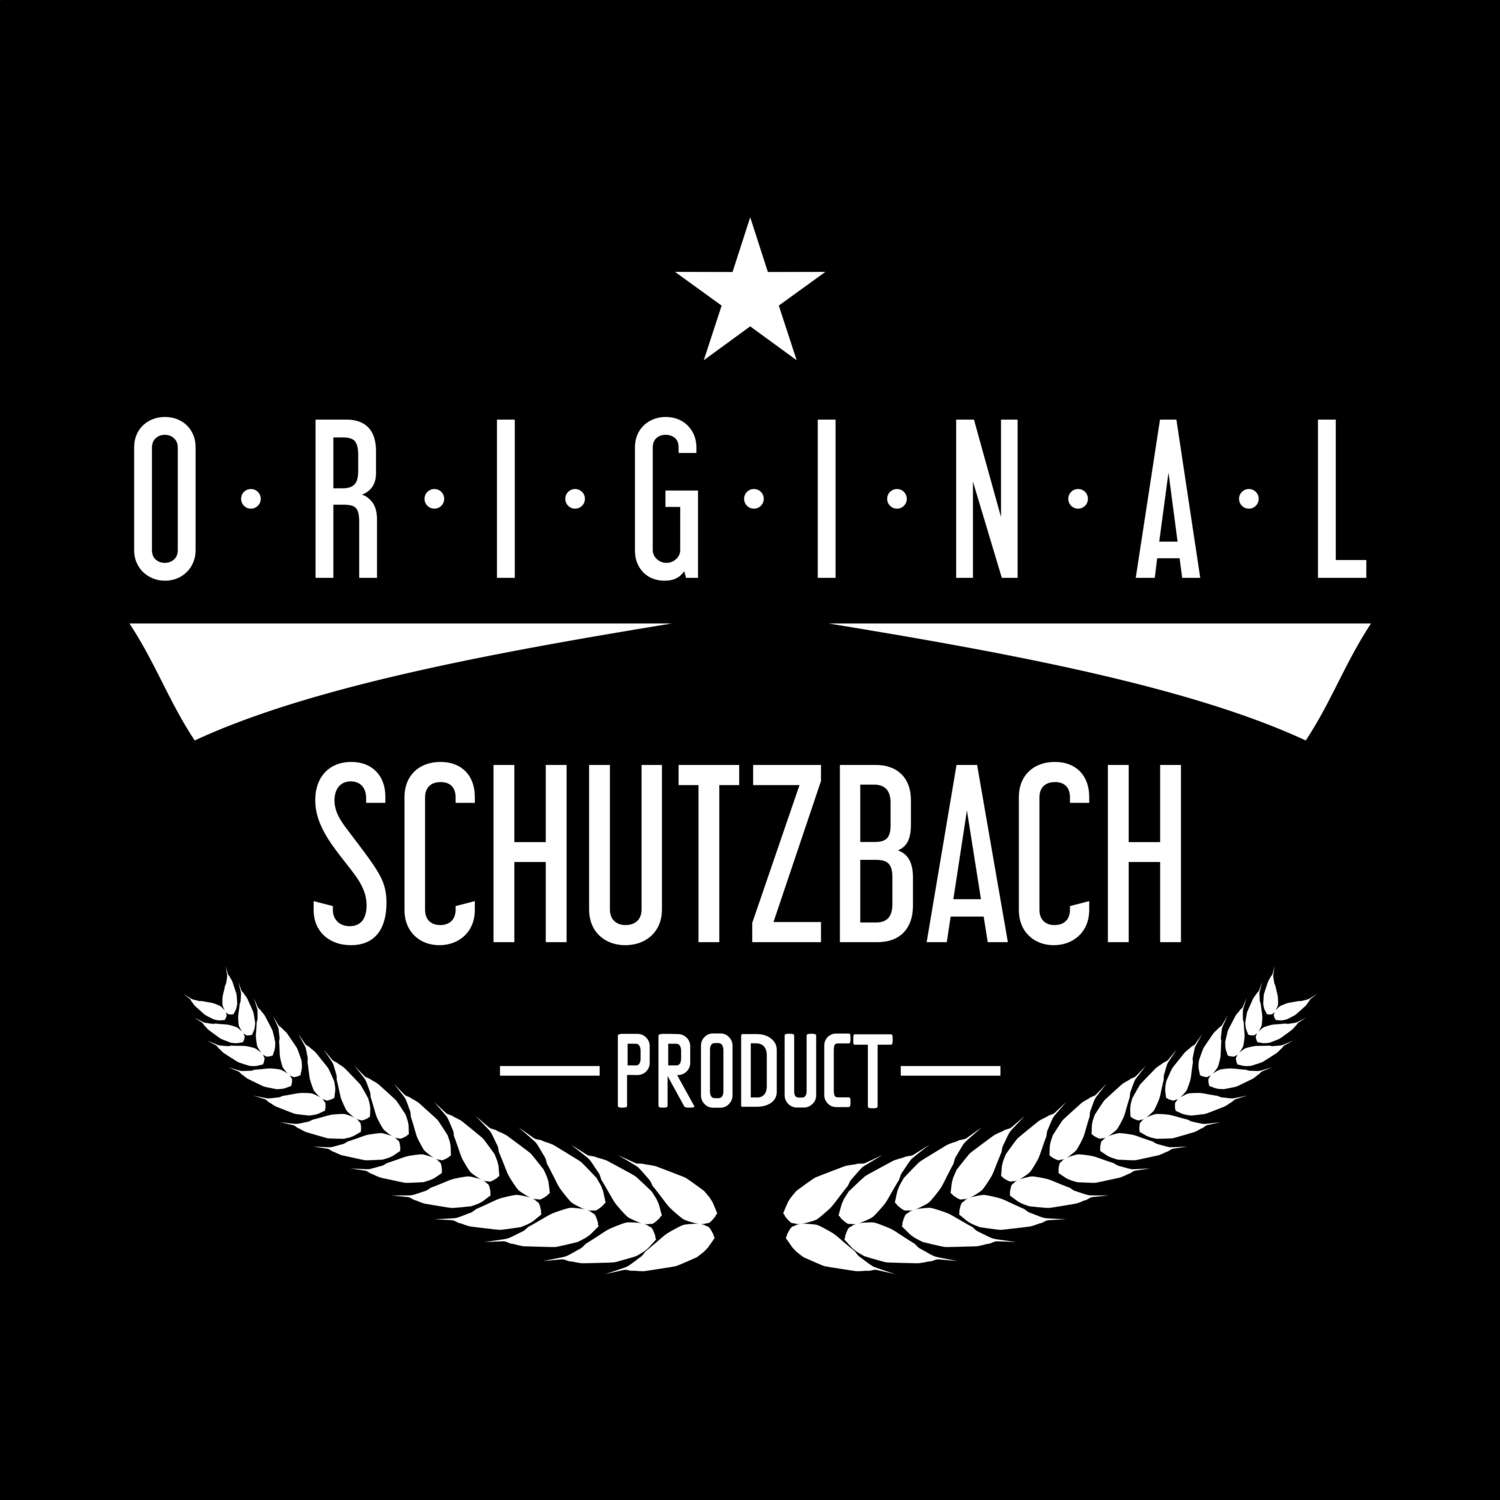 Schutzbach T-Shirt »Original Product«